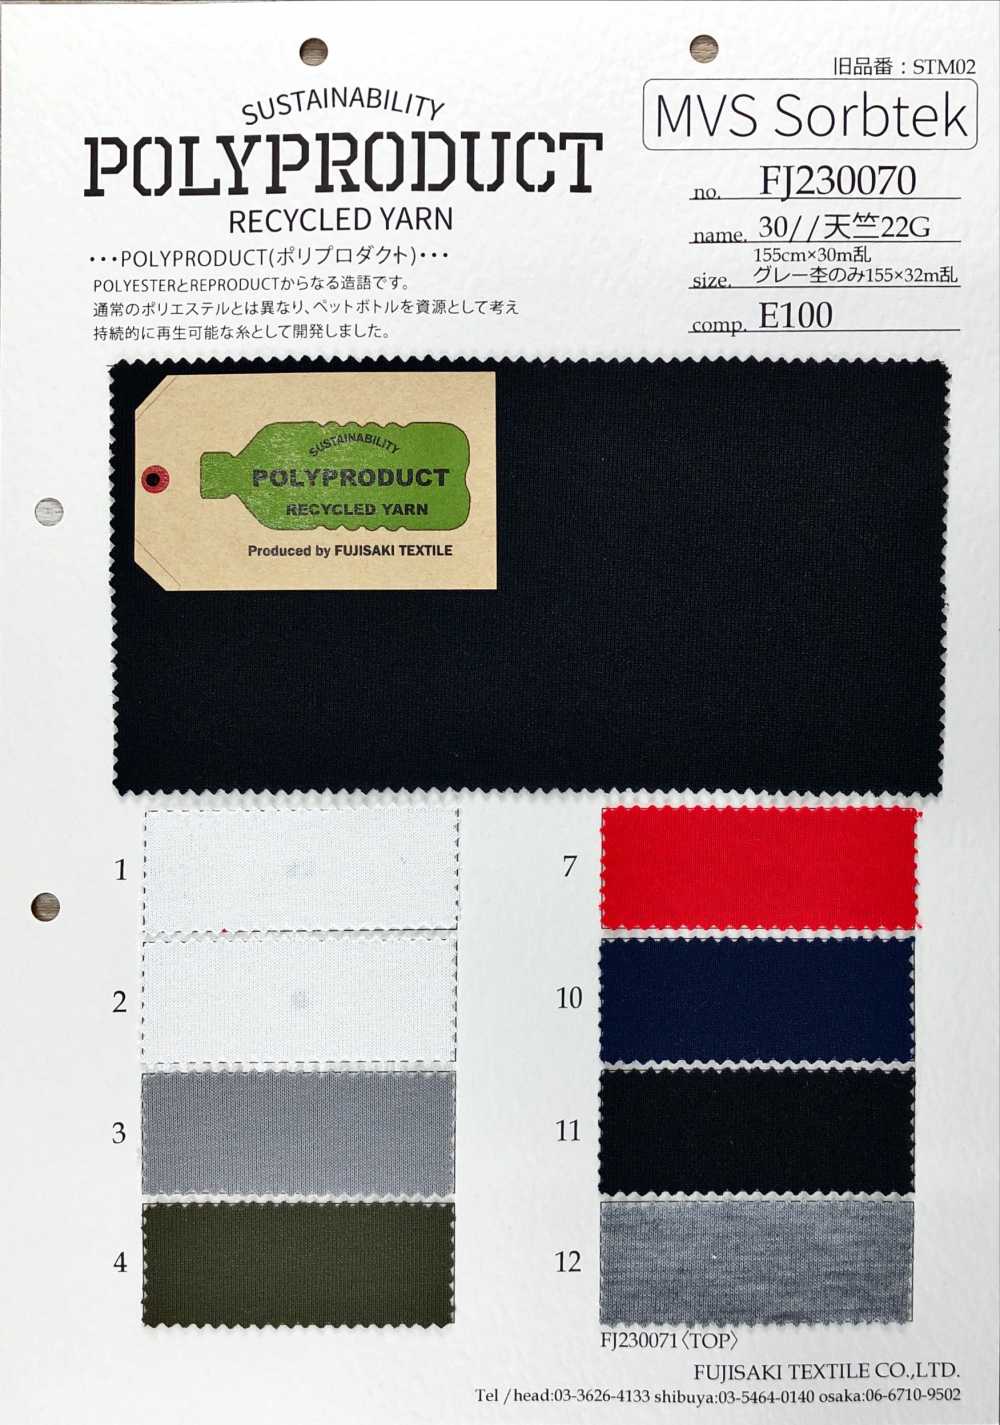 FJ230070 30//十天竺平針織物22G[面料] Fujisaki Textile